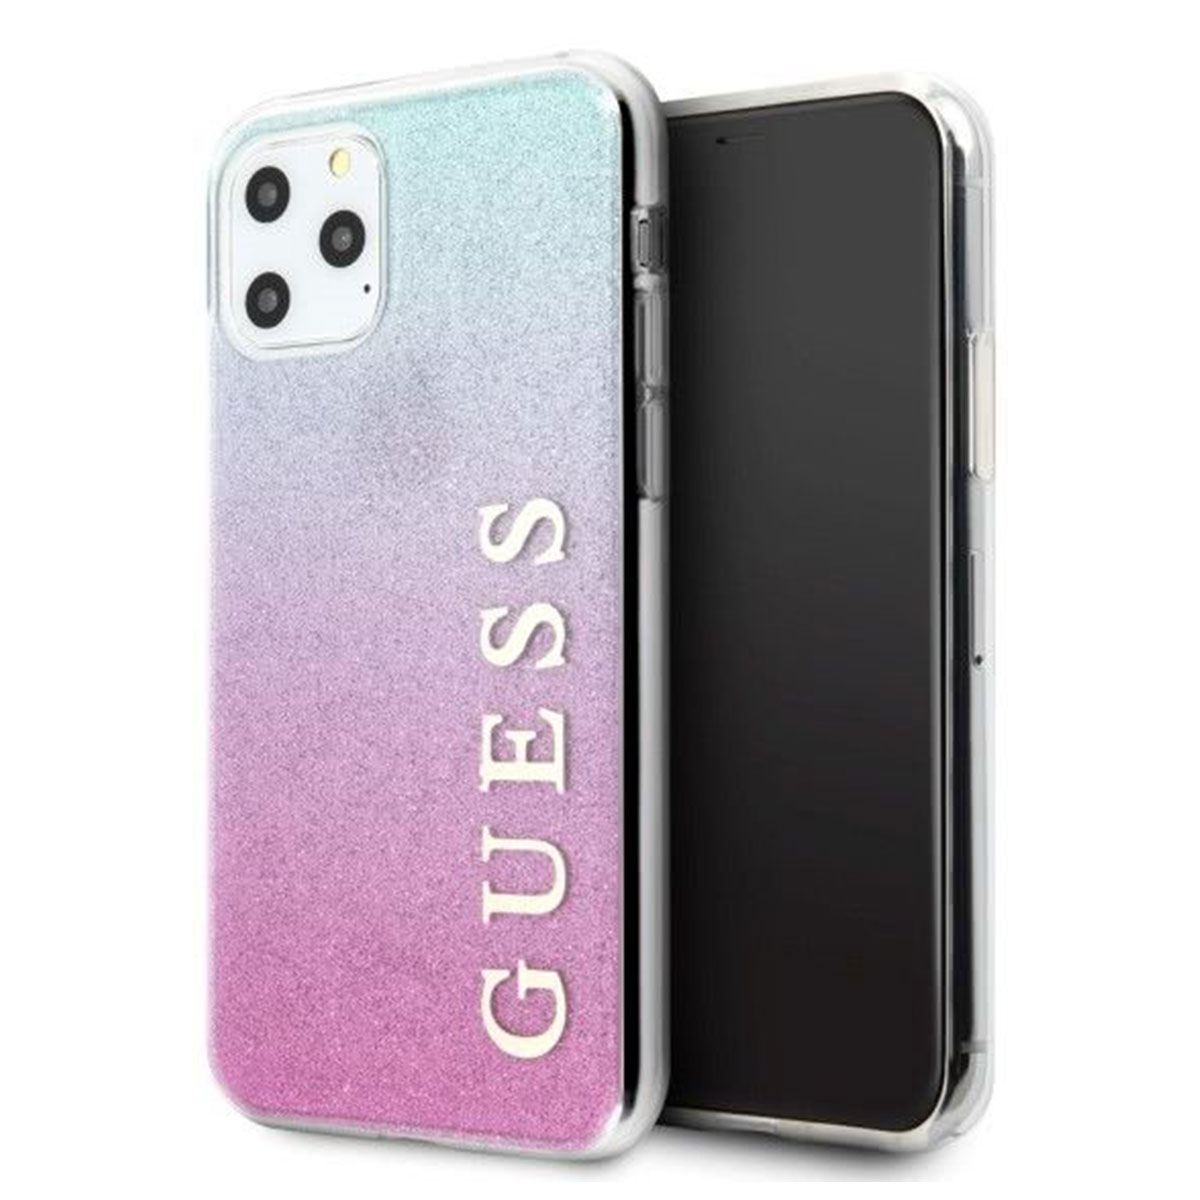 Husa Guess Pentru Iphone 11 Pro Max, Model Glitter Gradient, Plastic Tpu, Guhcn65pcuglpbl, Roz - Albastru